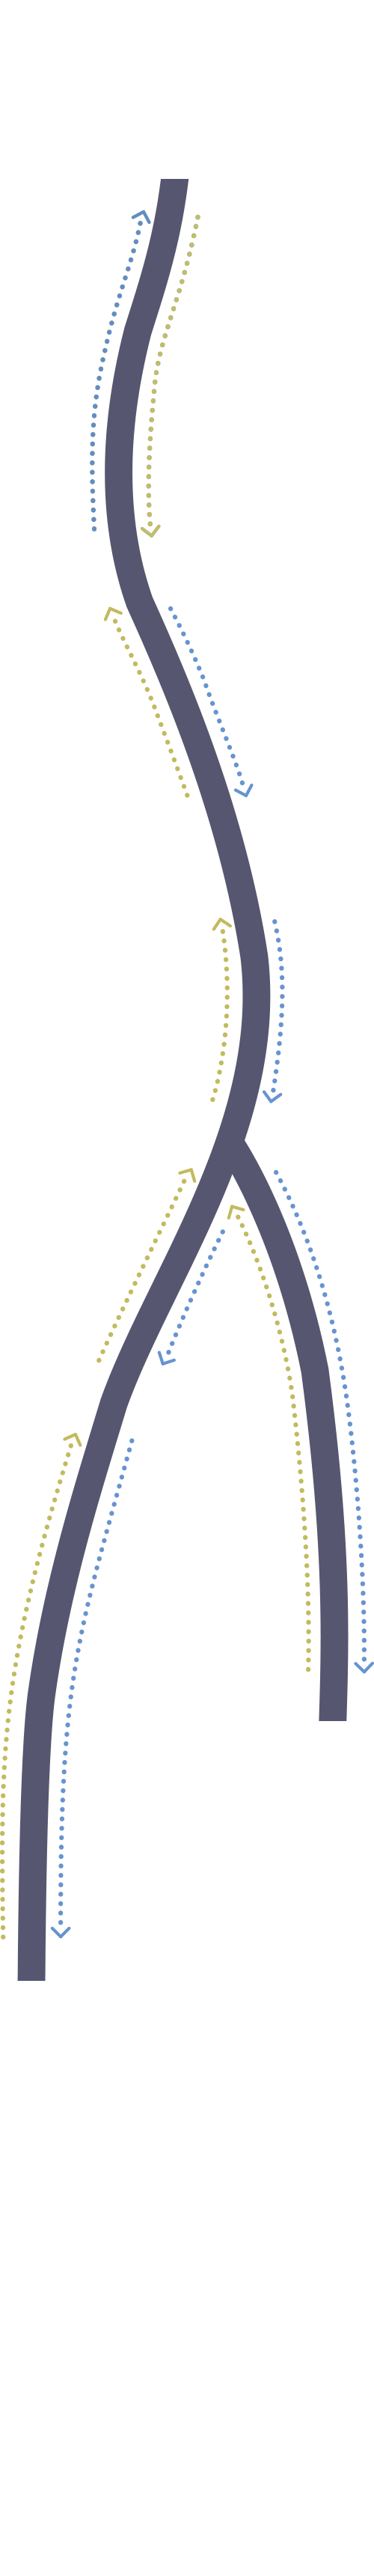 GSL metabolic pathway